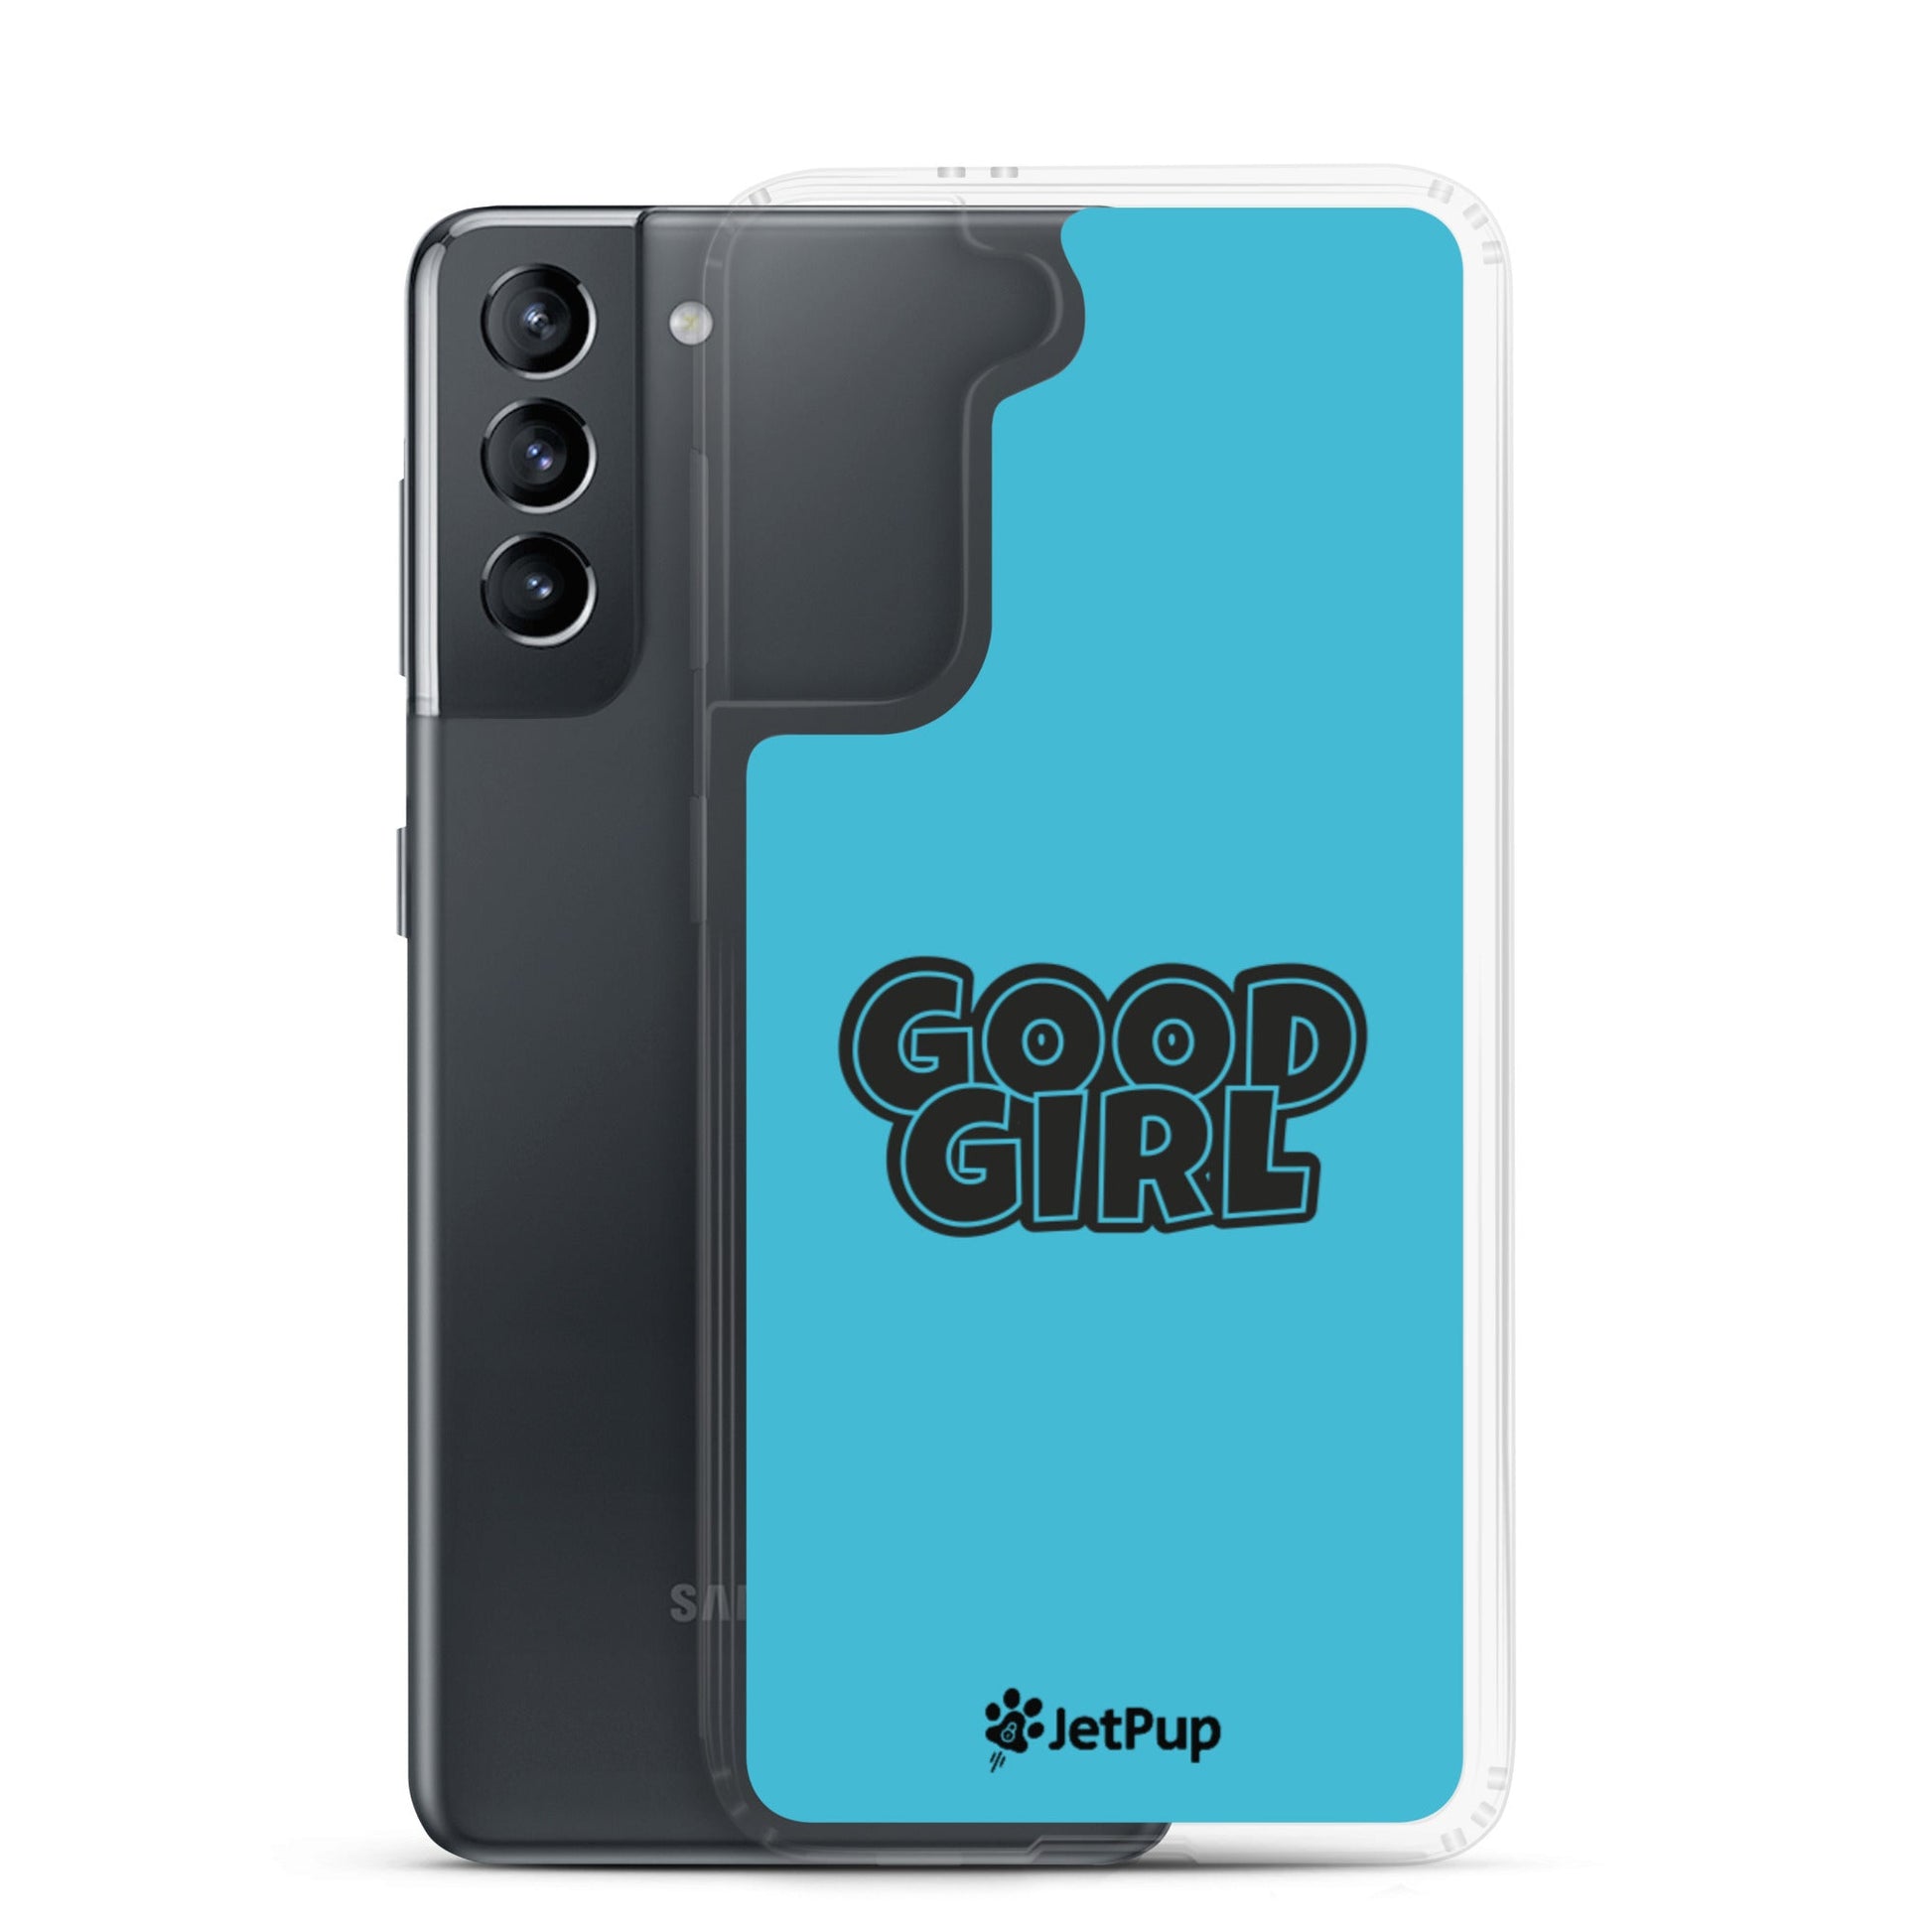 Good Girl Samsung Case - Sky Blue - JetPup